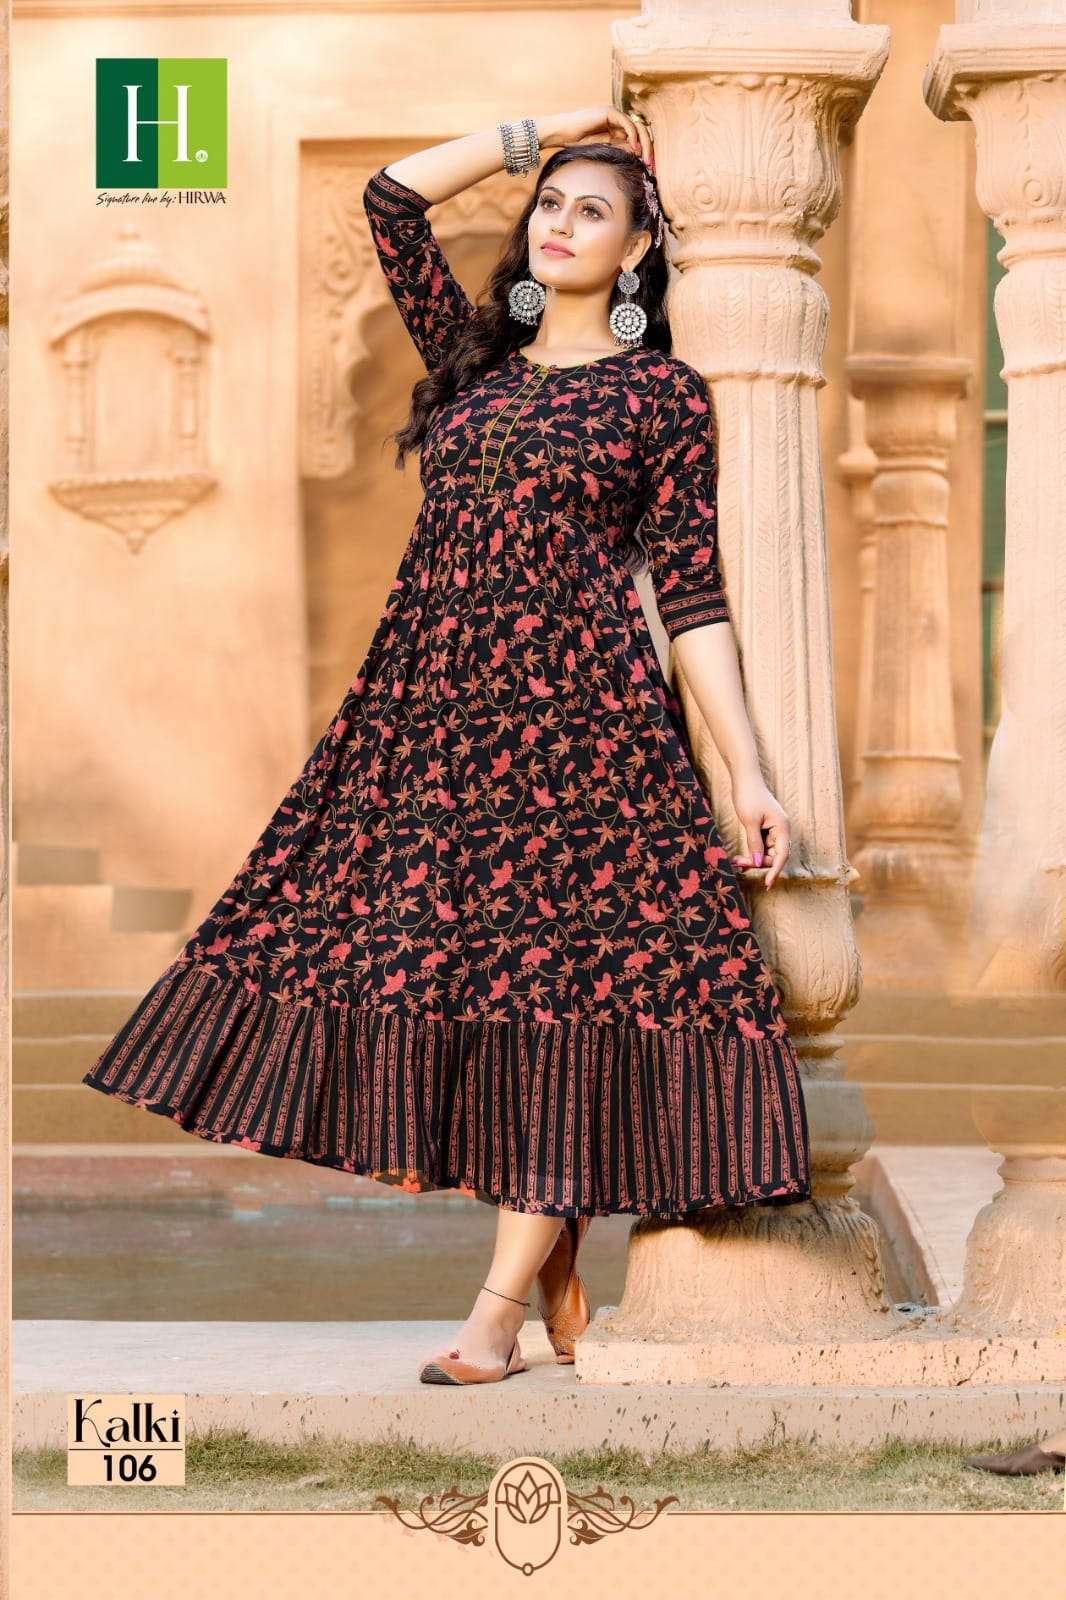 hirwa kalki 101-108 series cotton cambric designer long gown catalogue online supplier surat 